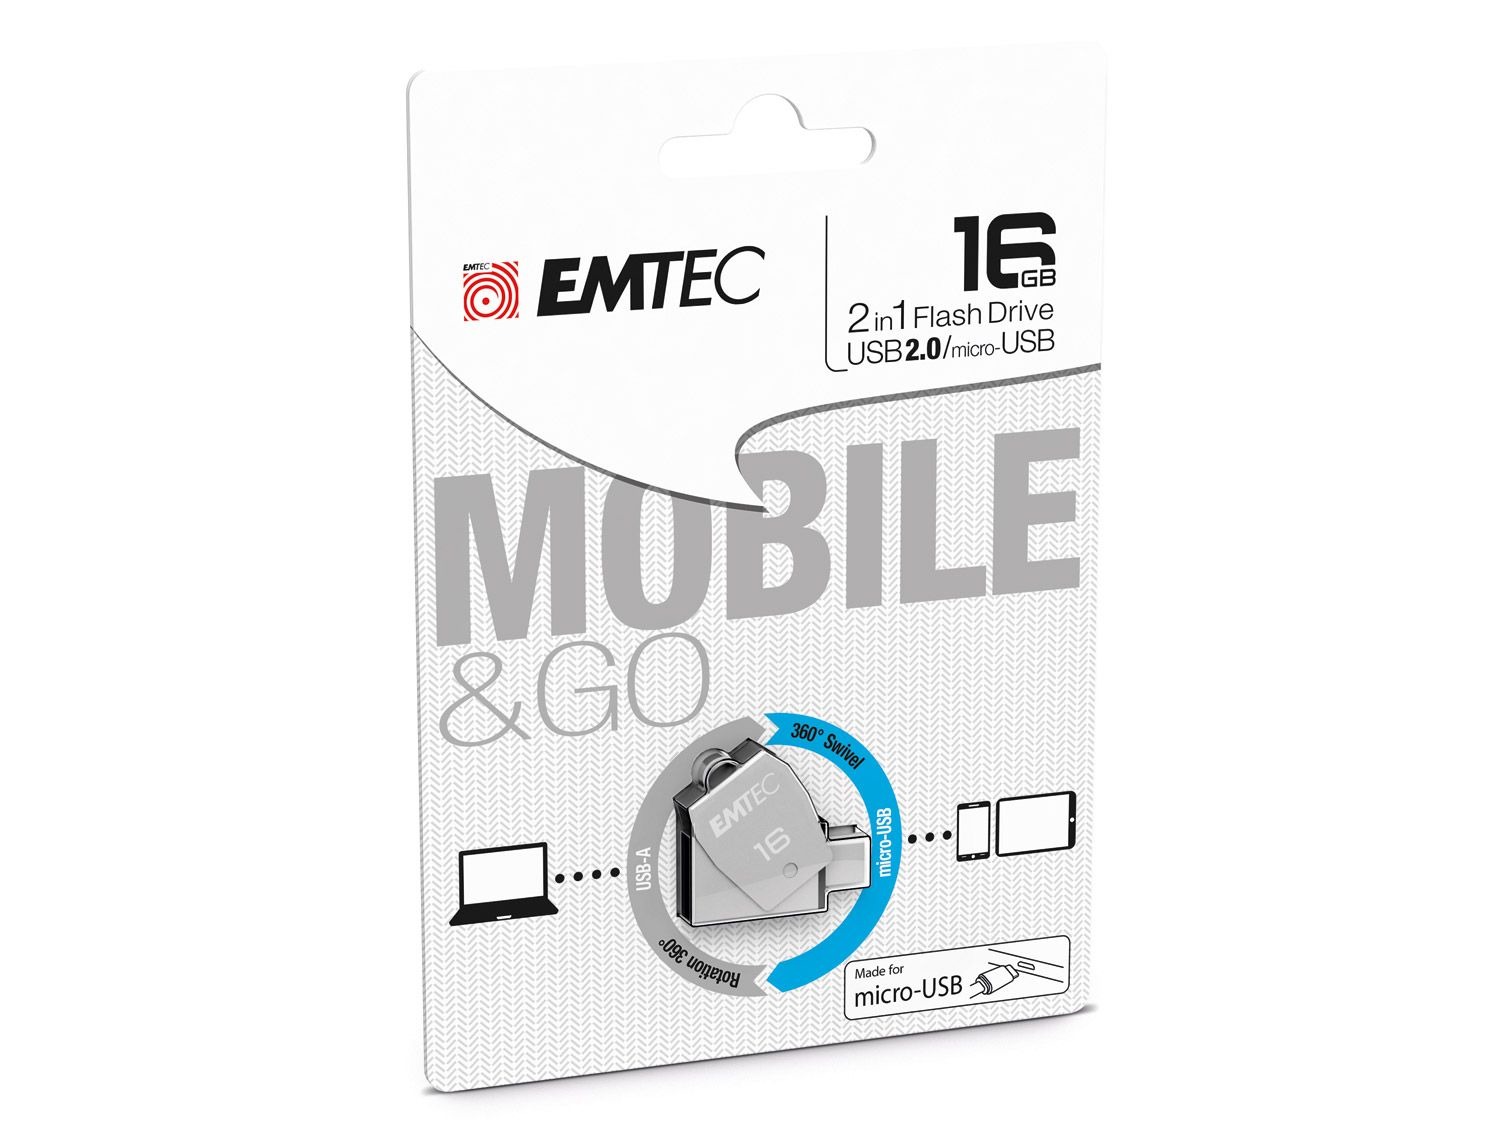 Emtec T250 Stick micro-USB Dual USB 2.0